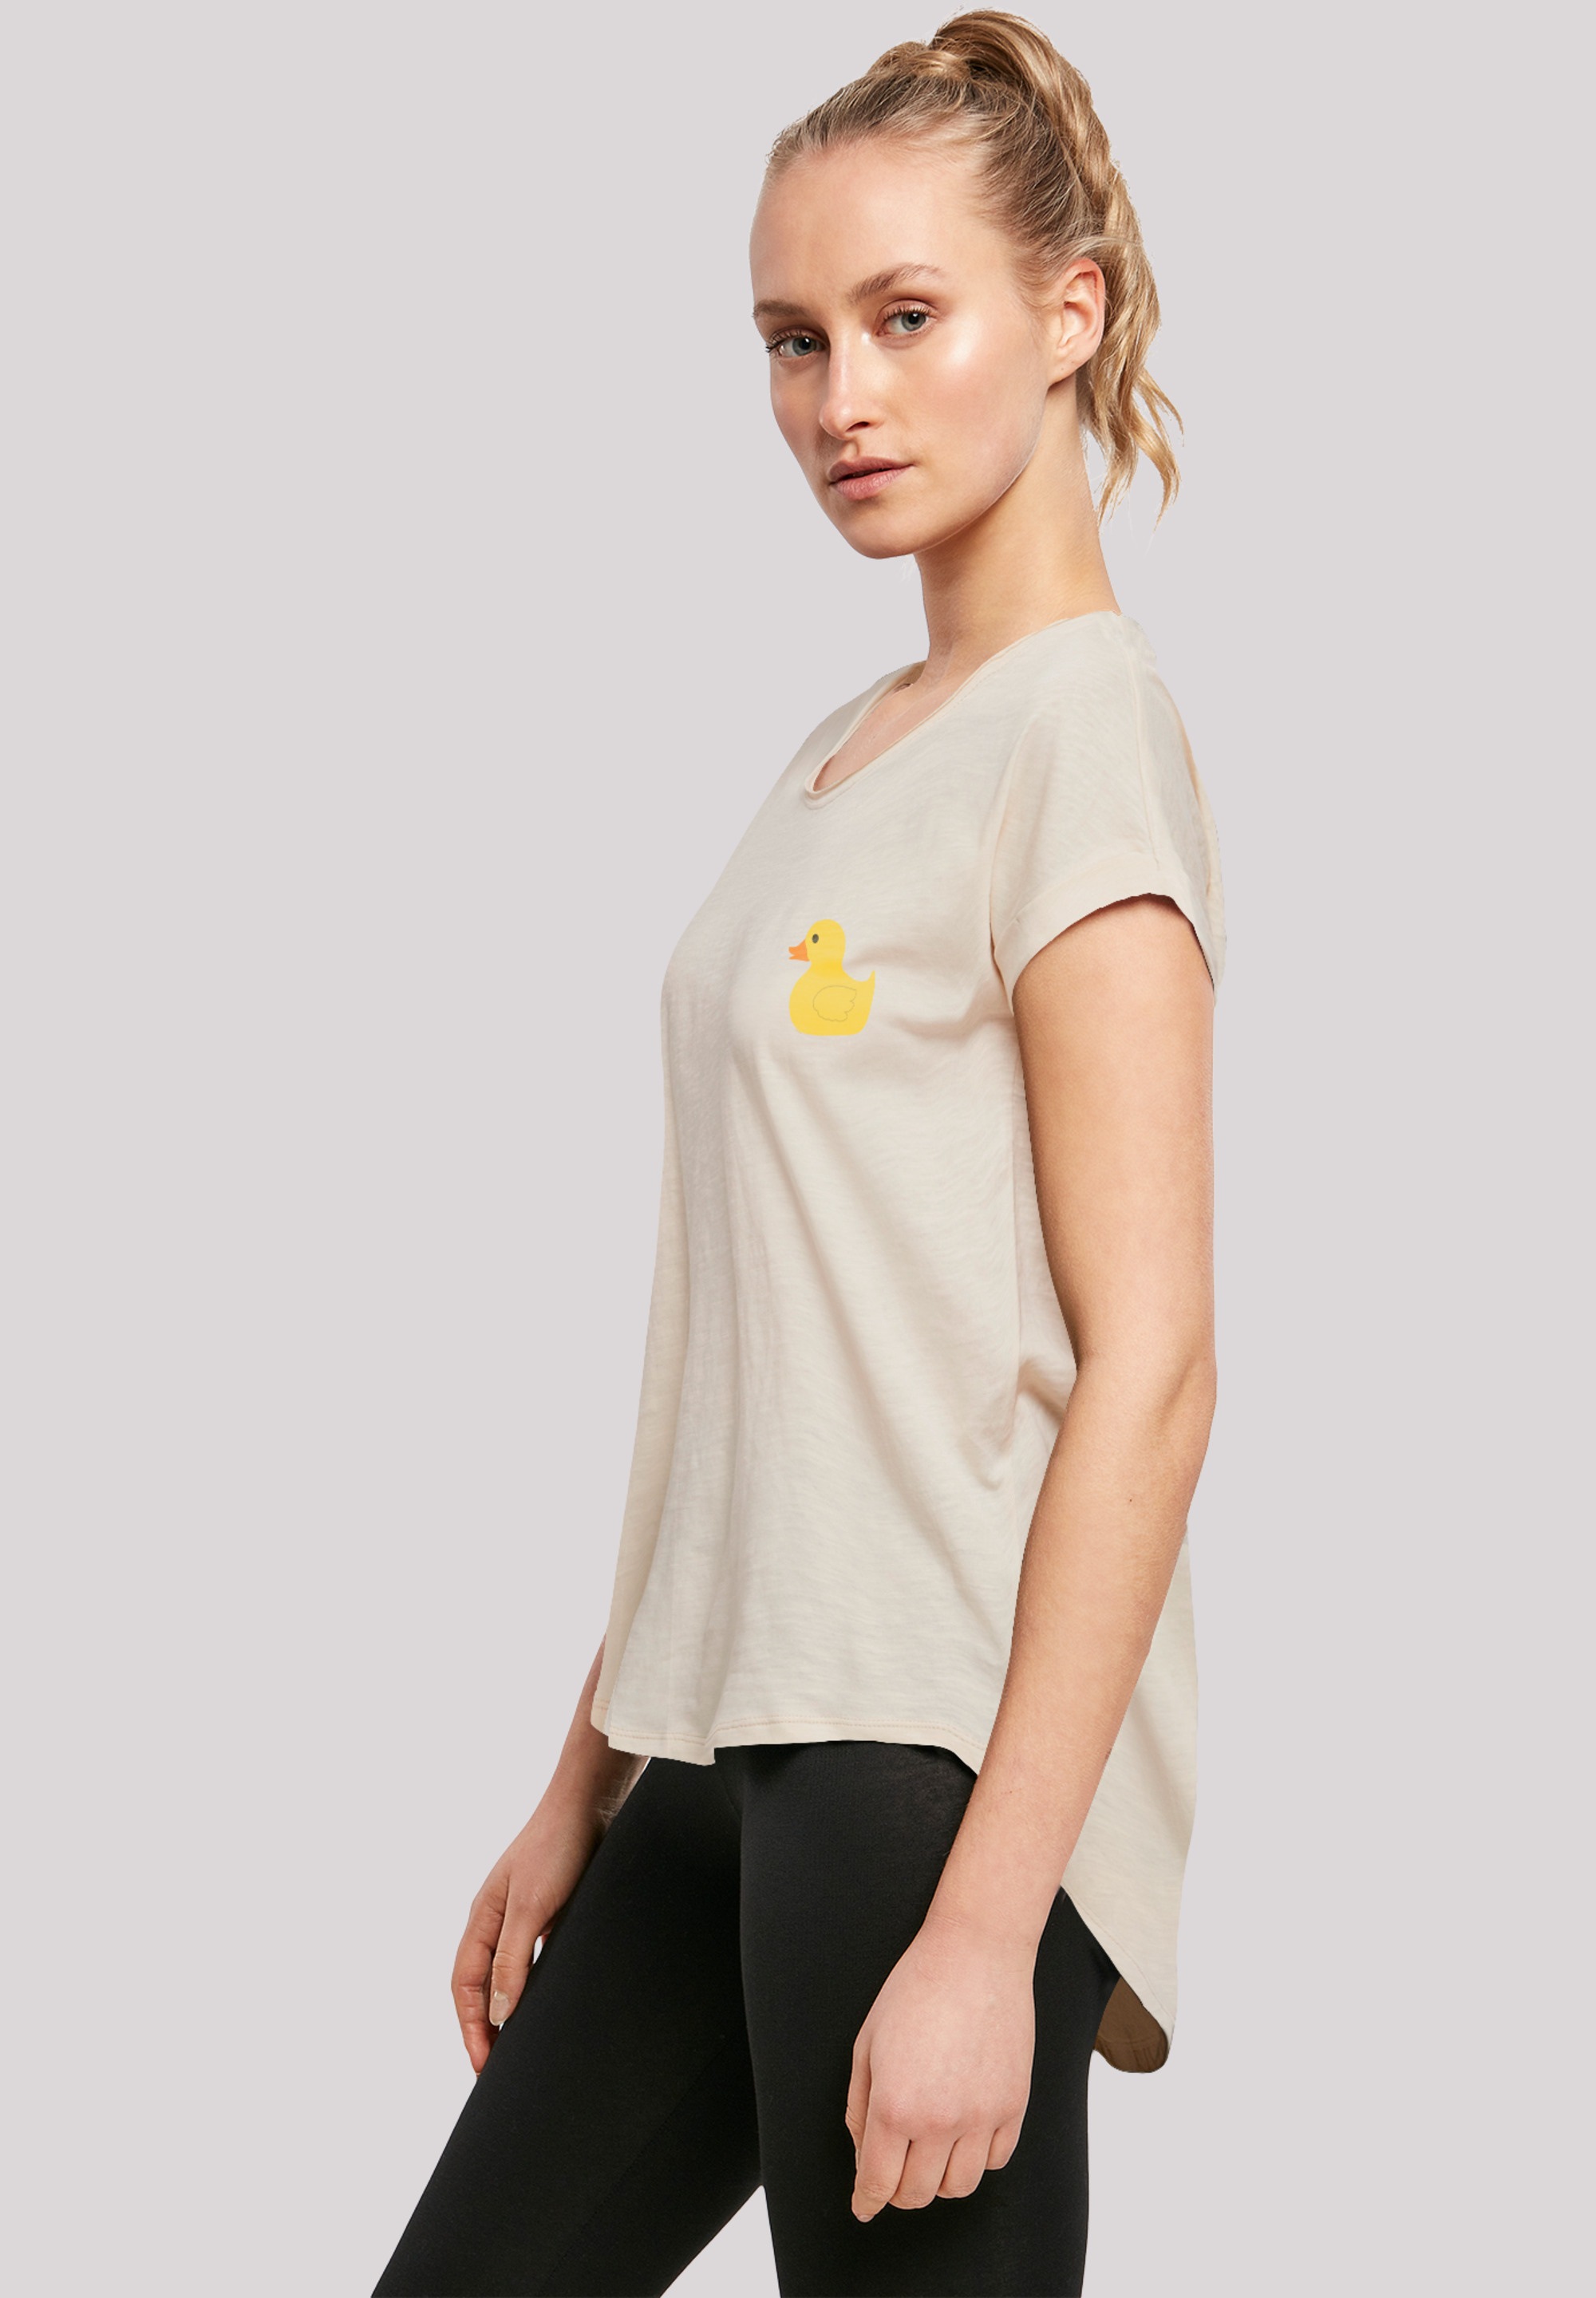 Print kaufen T-Shirt Rubber LONG«, »Yellow F4NT4STIC Duck